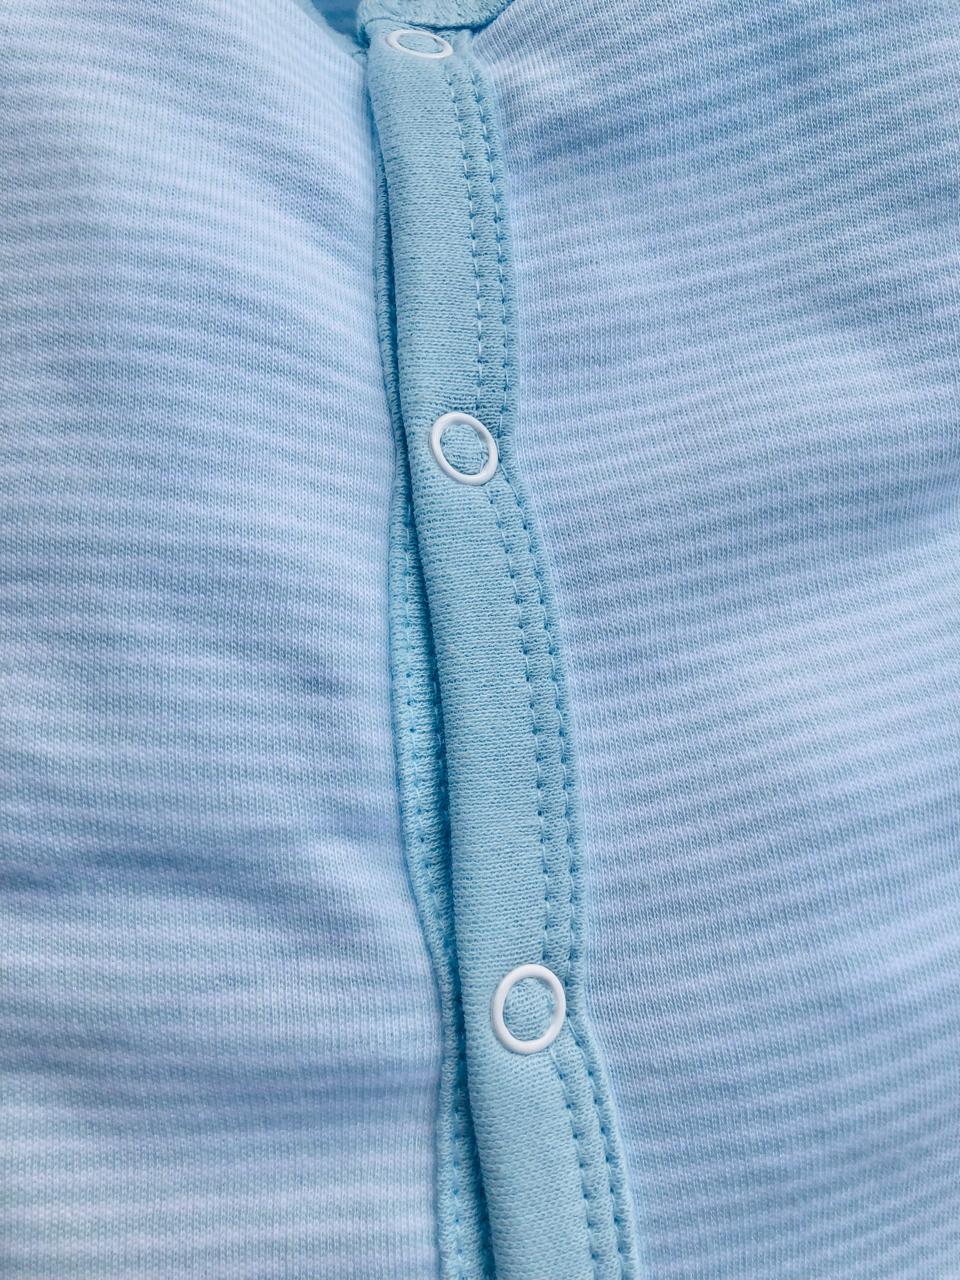 Baby Full Sleeve Romper/Bodysuit/Sleepsuit and Cap Set/Newborn Essentials (0-3 Months, Pack of 2)(Blue stripes)